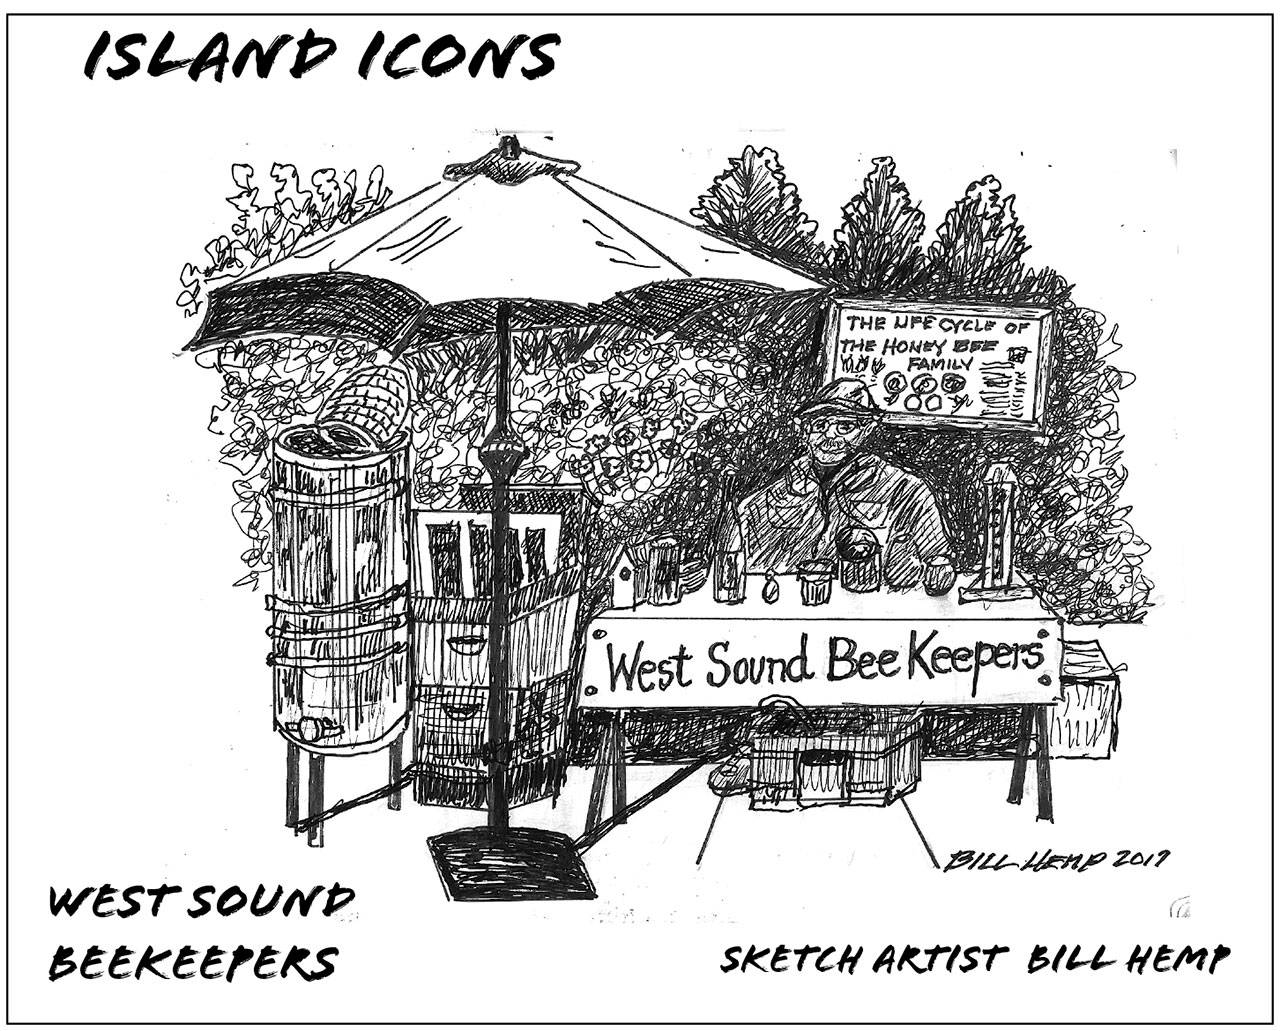 This week with Bainbridge Island sketch artist Bill Hemp